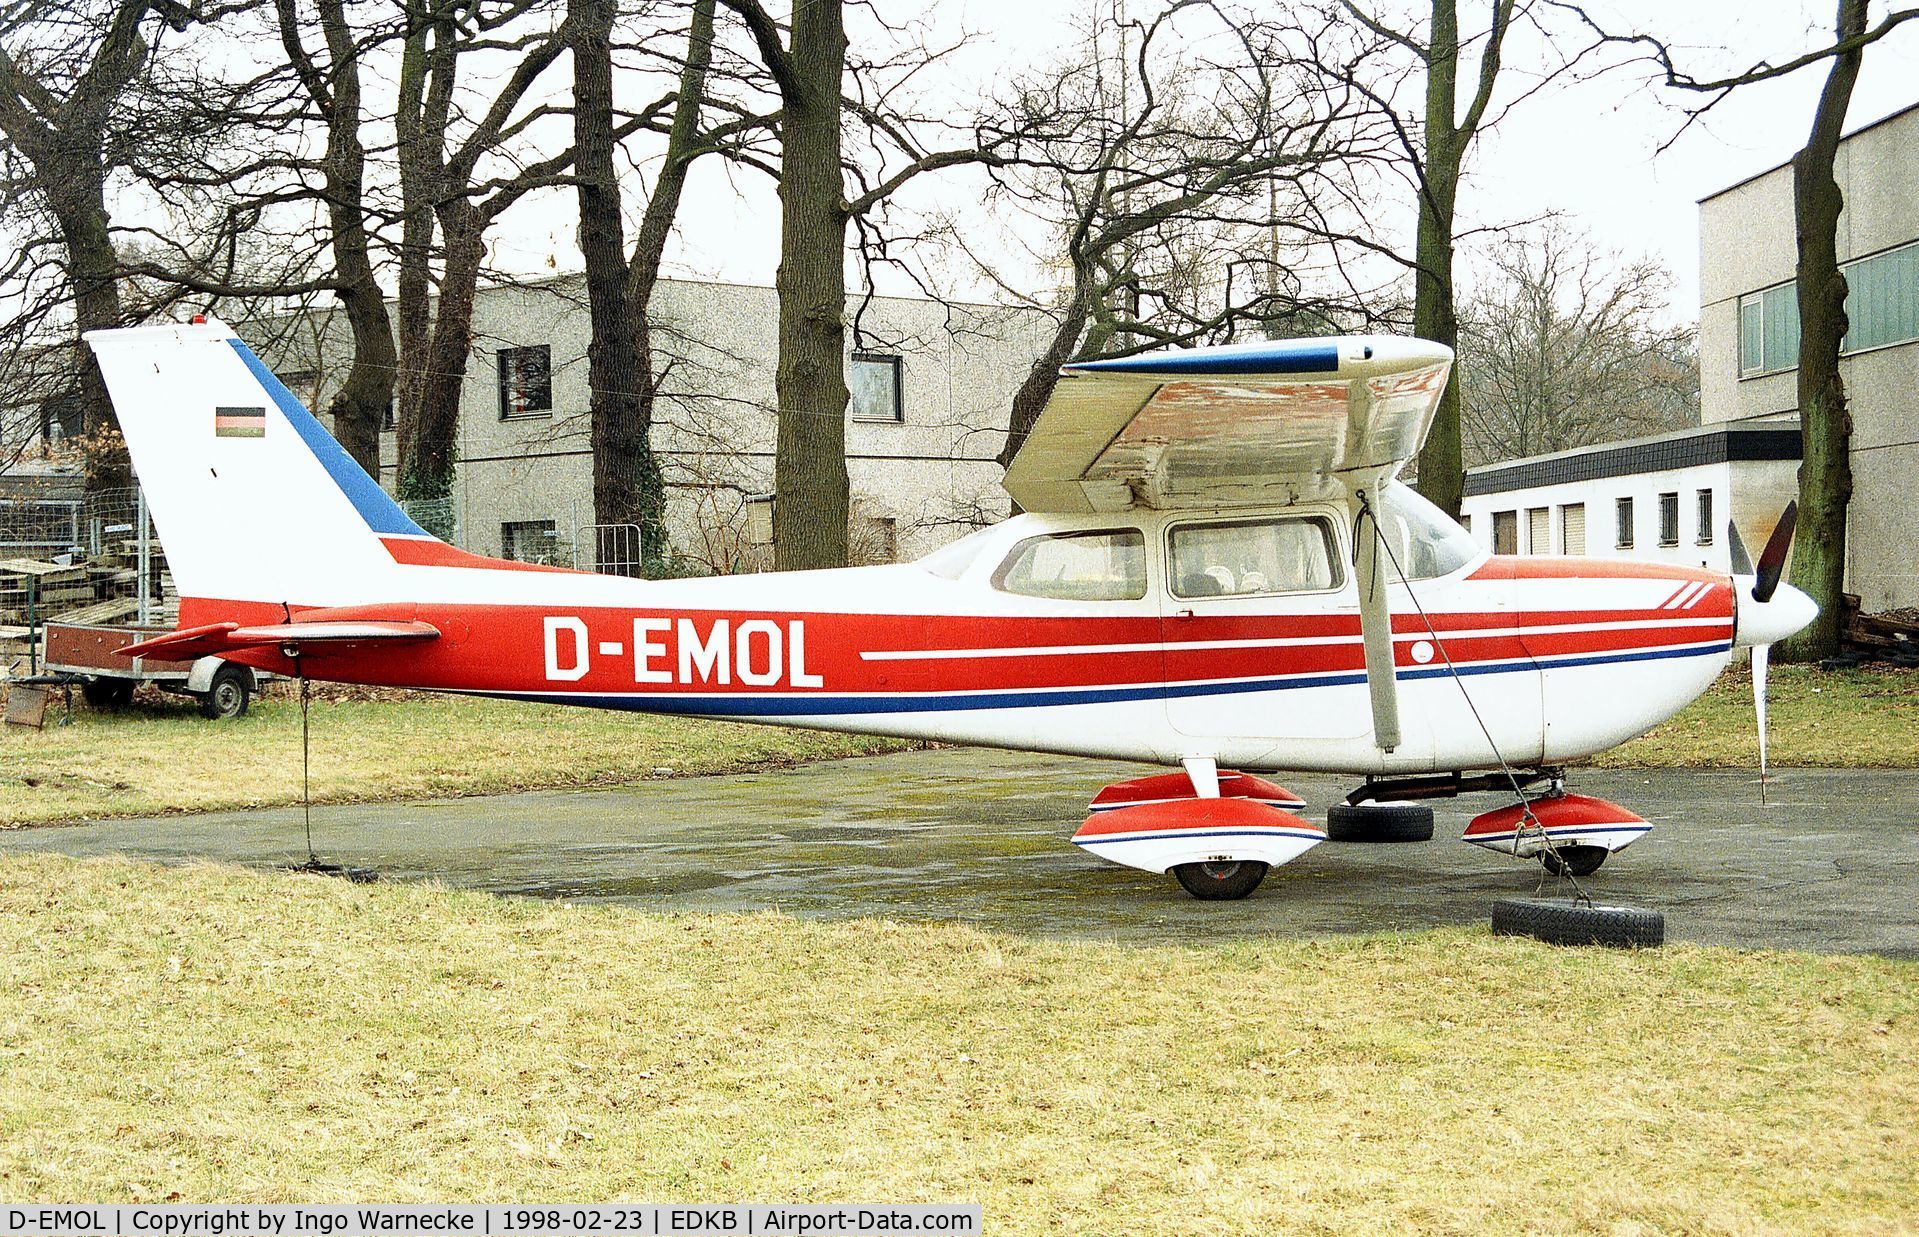 D-EMOL, Reims FR172F Reims Rocket C/N 0079, Cessna (Reims) FR172F Rocket at Bonn-Hangelar airfield